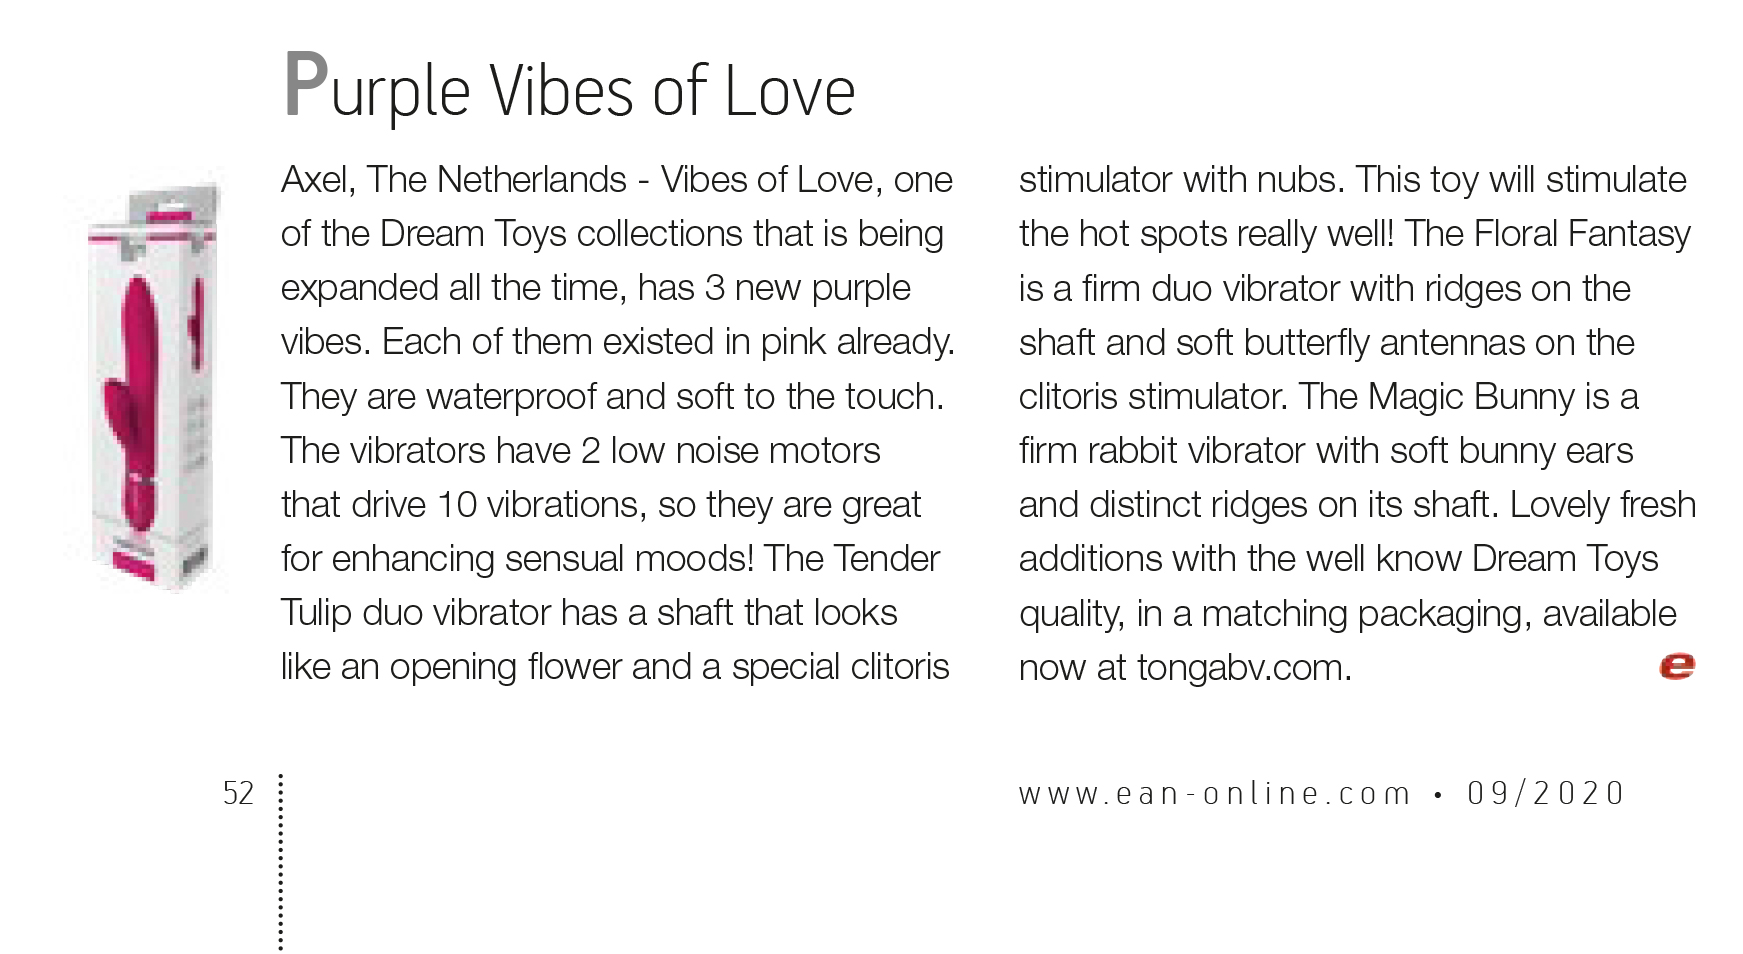 2020-09 EAN - Dream Toys Vibes of Love